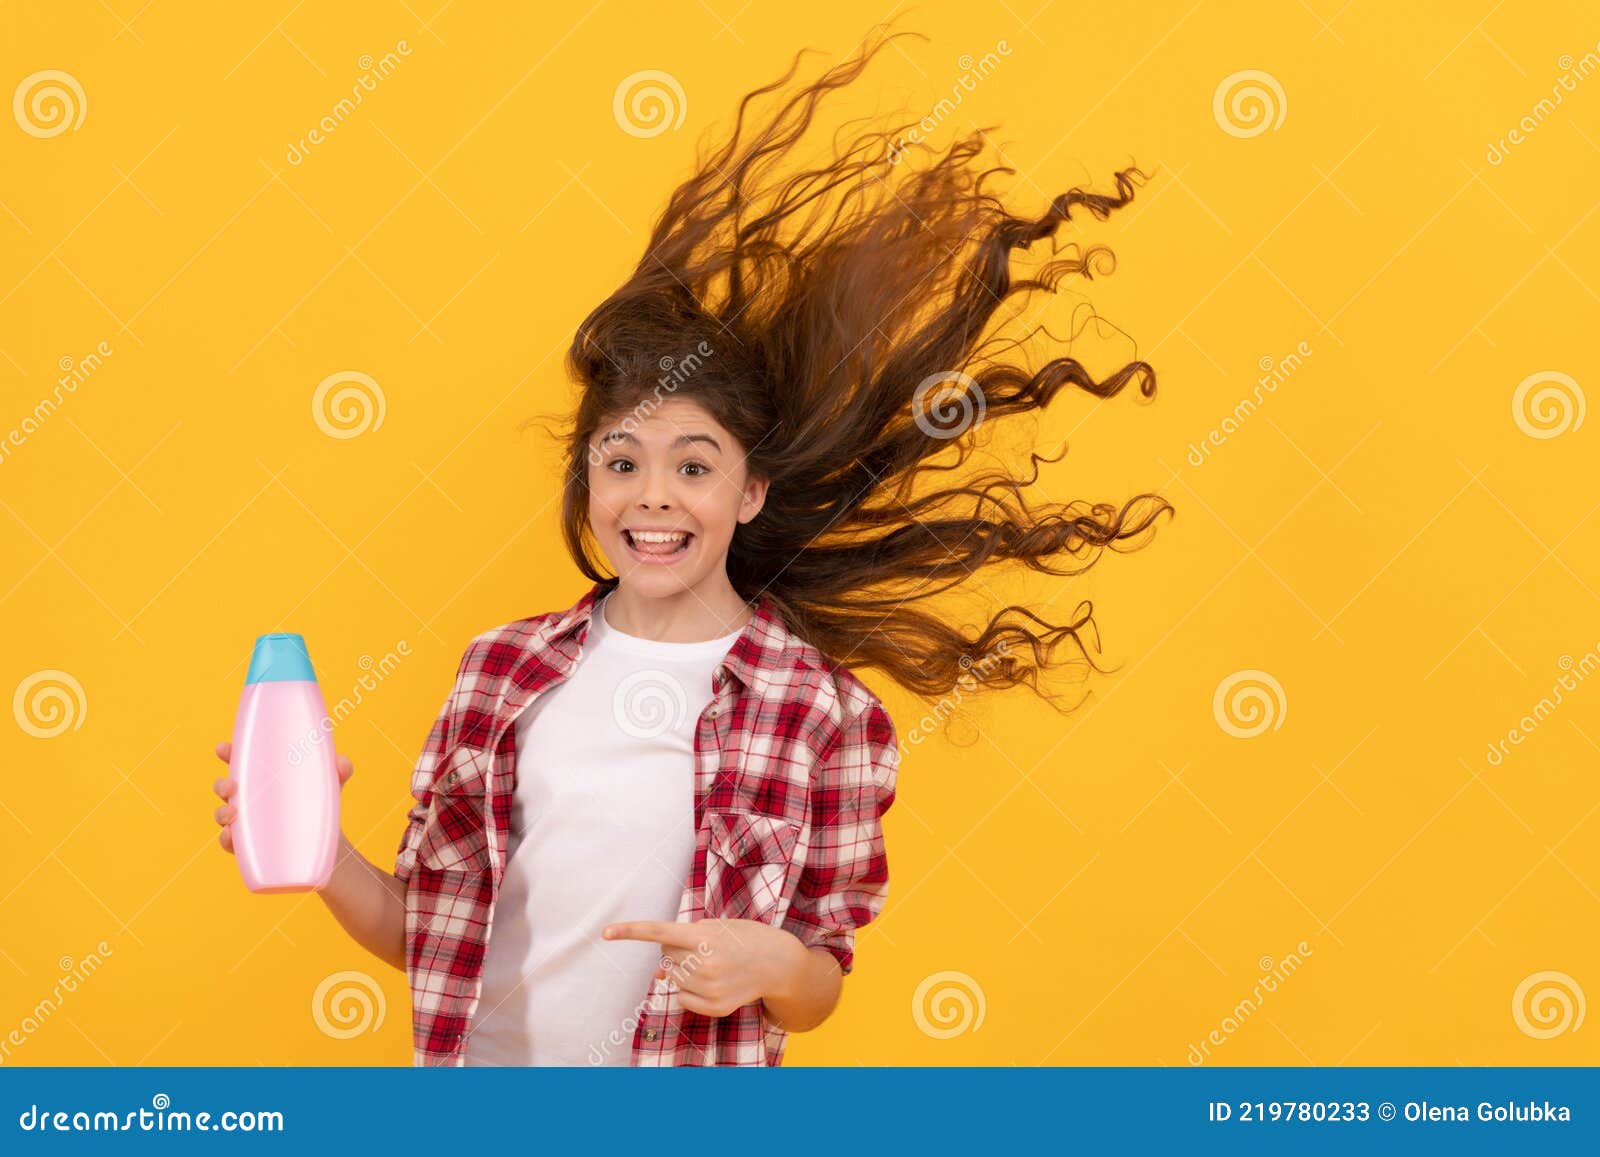 Kid Use Shower Gel. Happy Teen Girl with Shampoo Bottle. Shampooing Hair in  Salon Stock Image - Image of salon, tween: 219780233